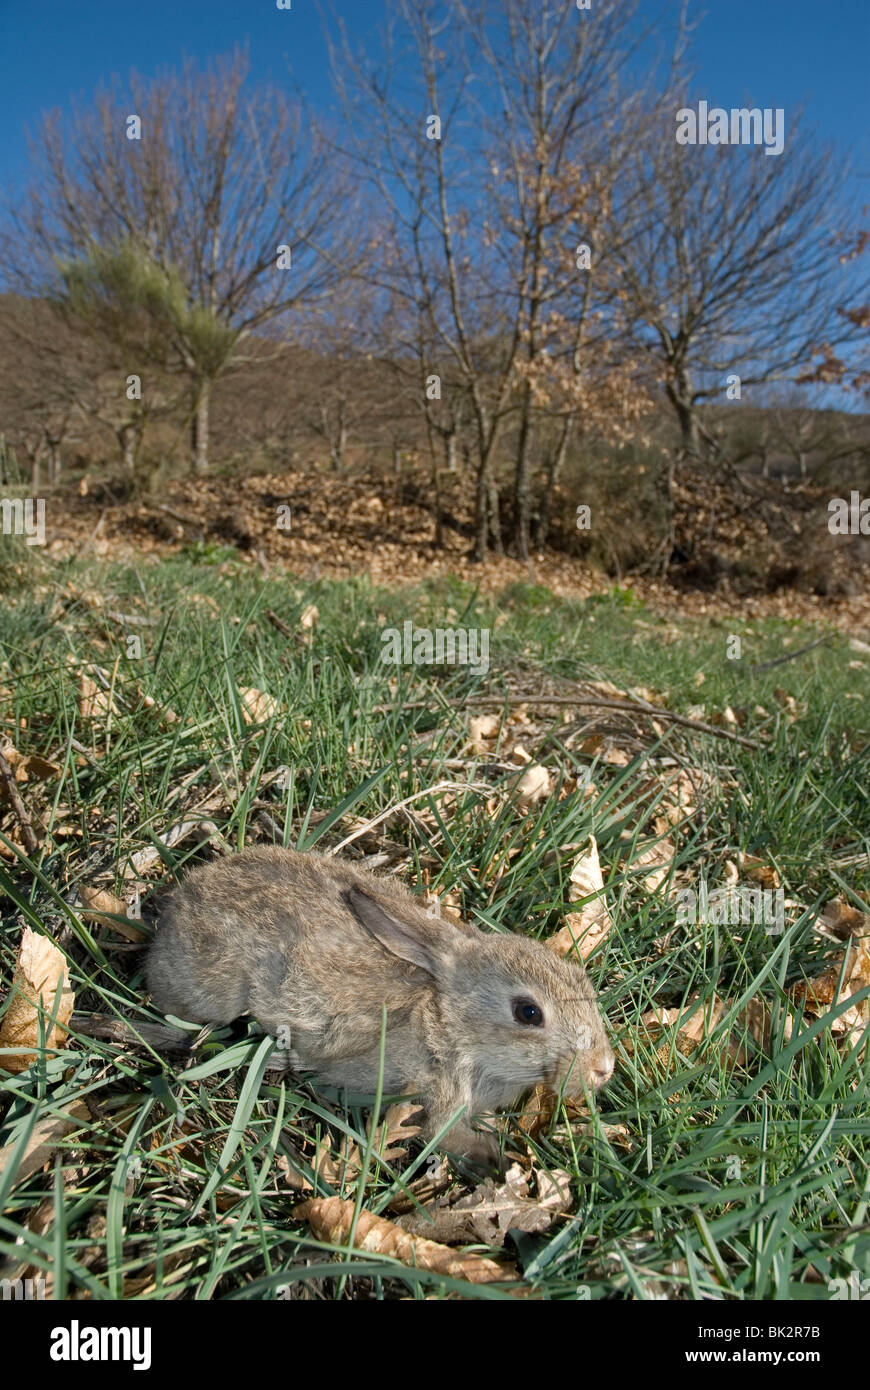 Young rabbit (Oryctolagus cuniculus) Stock Photo